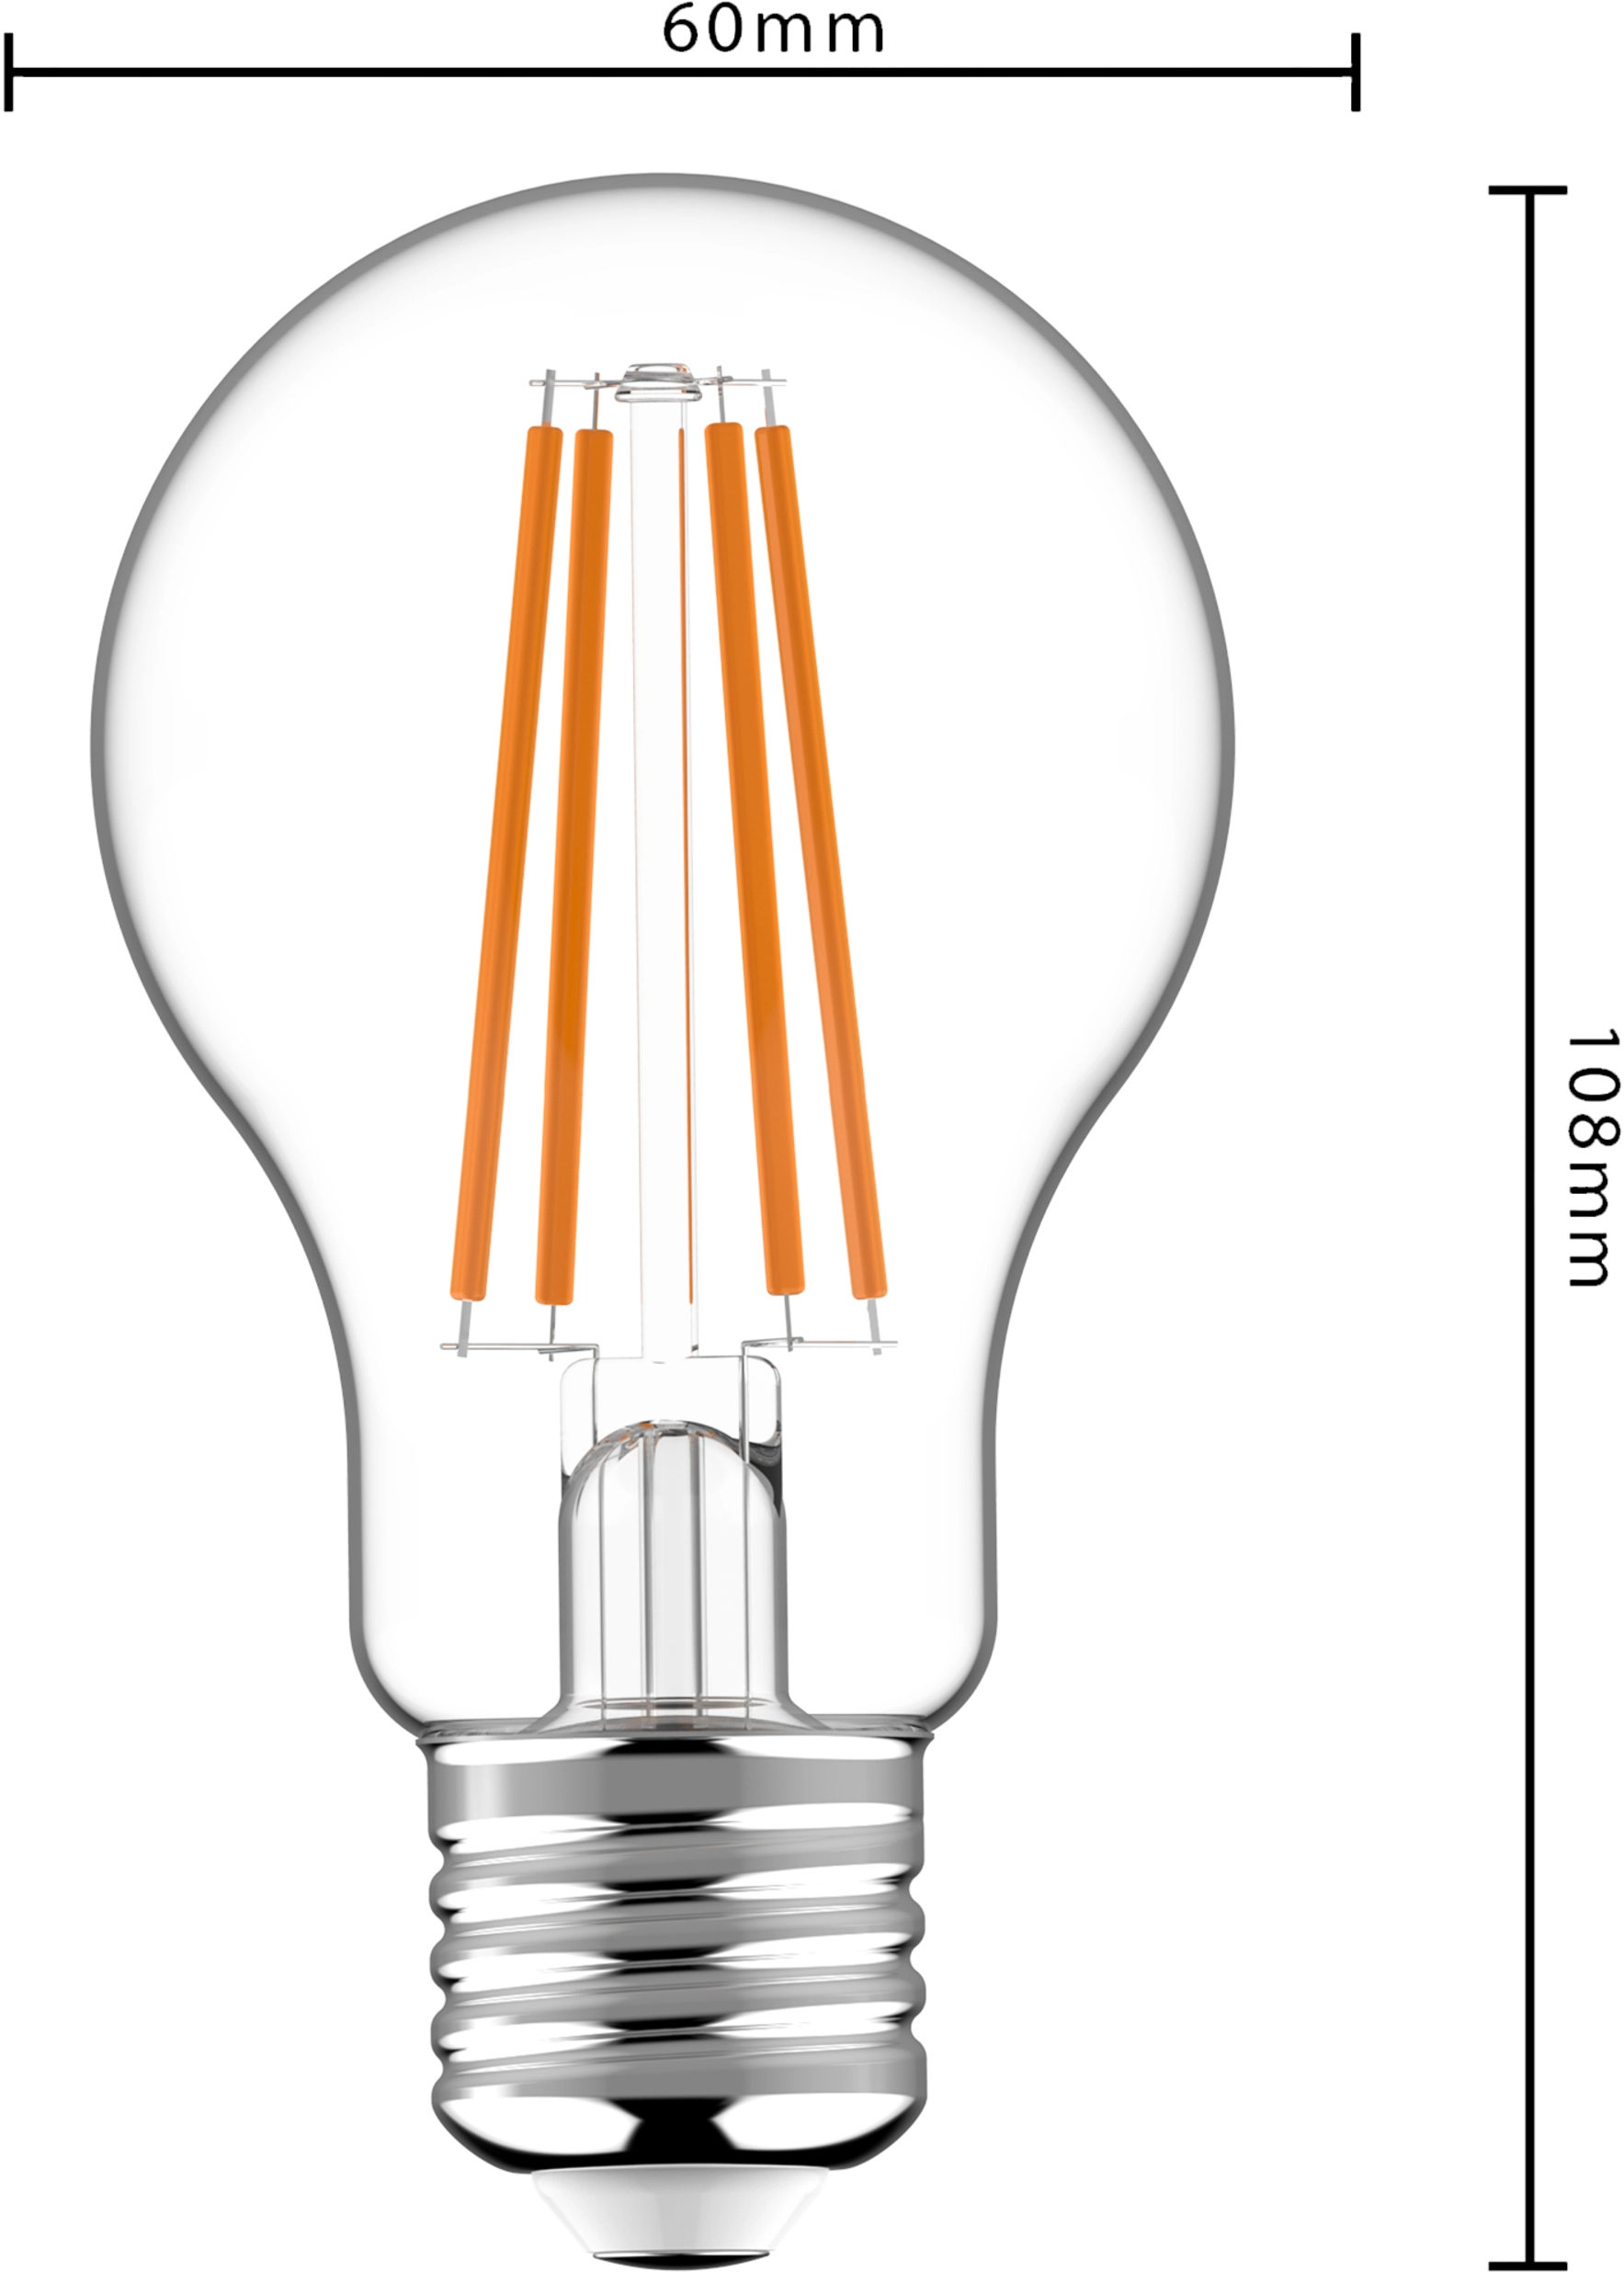 Philips LED-Leuchtmittel E27 Glühlampenform 8,5 W 1055 lm 10,4 x 6 cm (H x  Ø) kaufen bei OBI